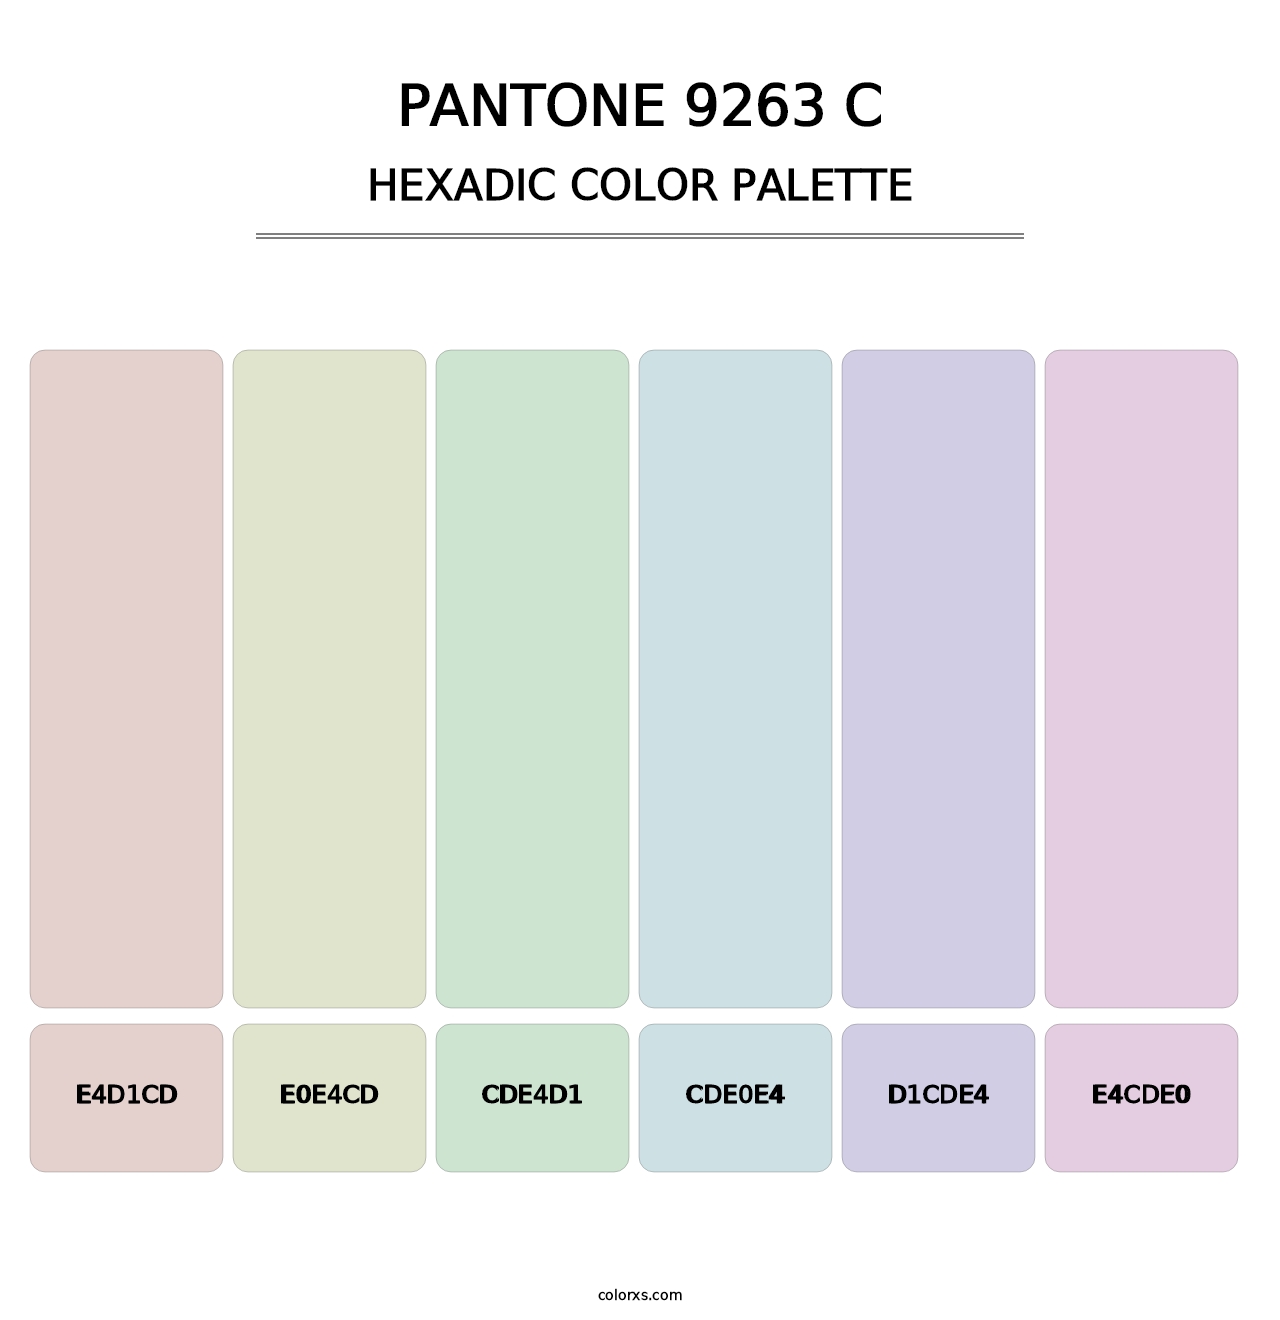 PANTONE 9263 C - Hexadic Color Palette